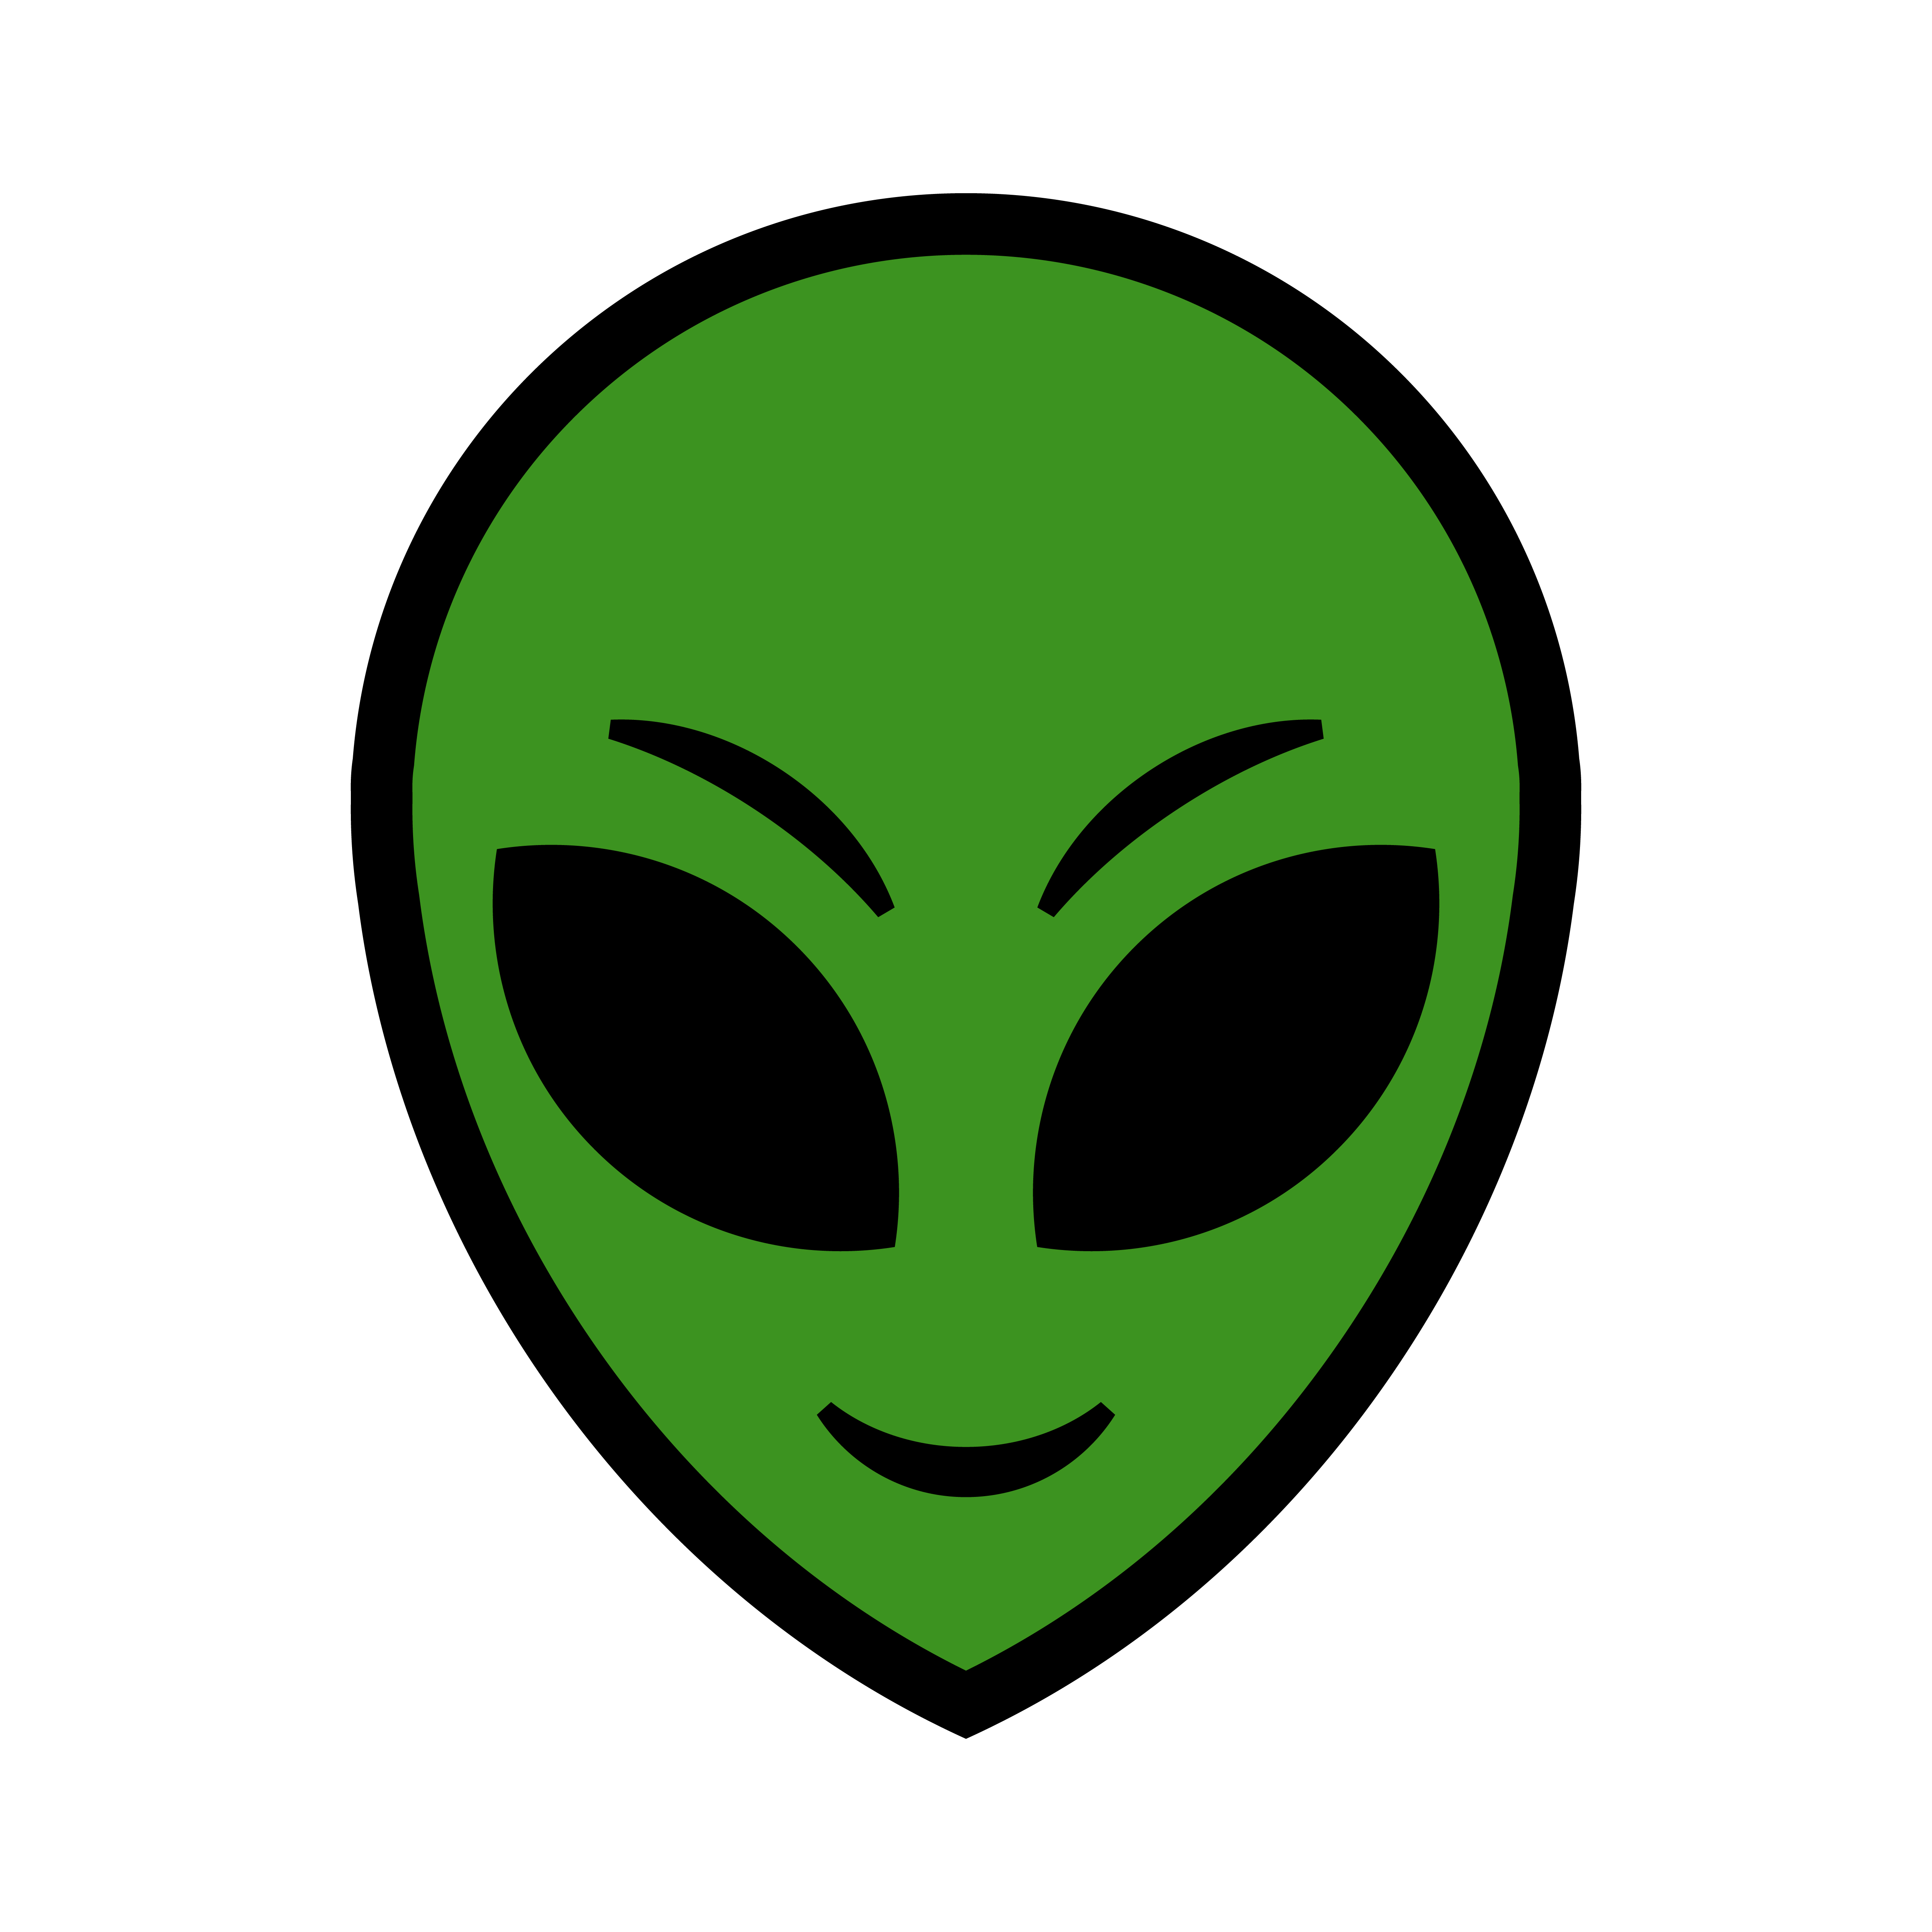 Alien head vector illustration - Download Free Vectors ...